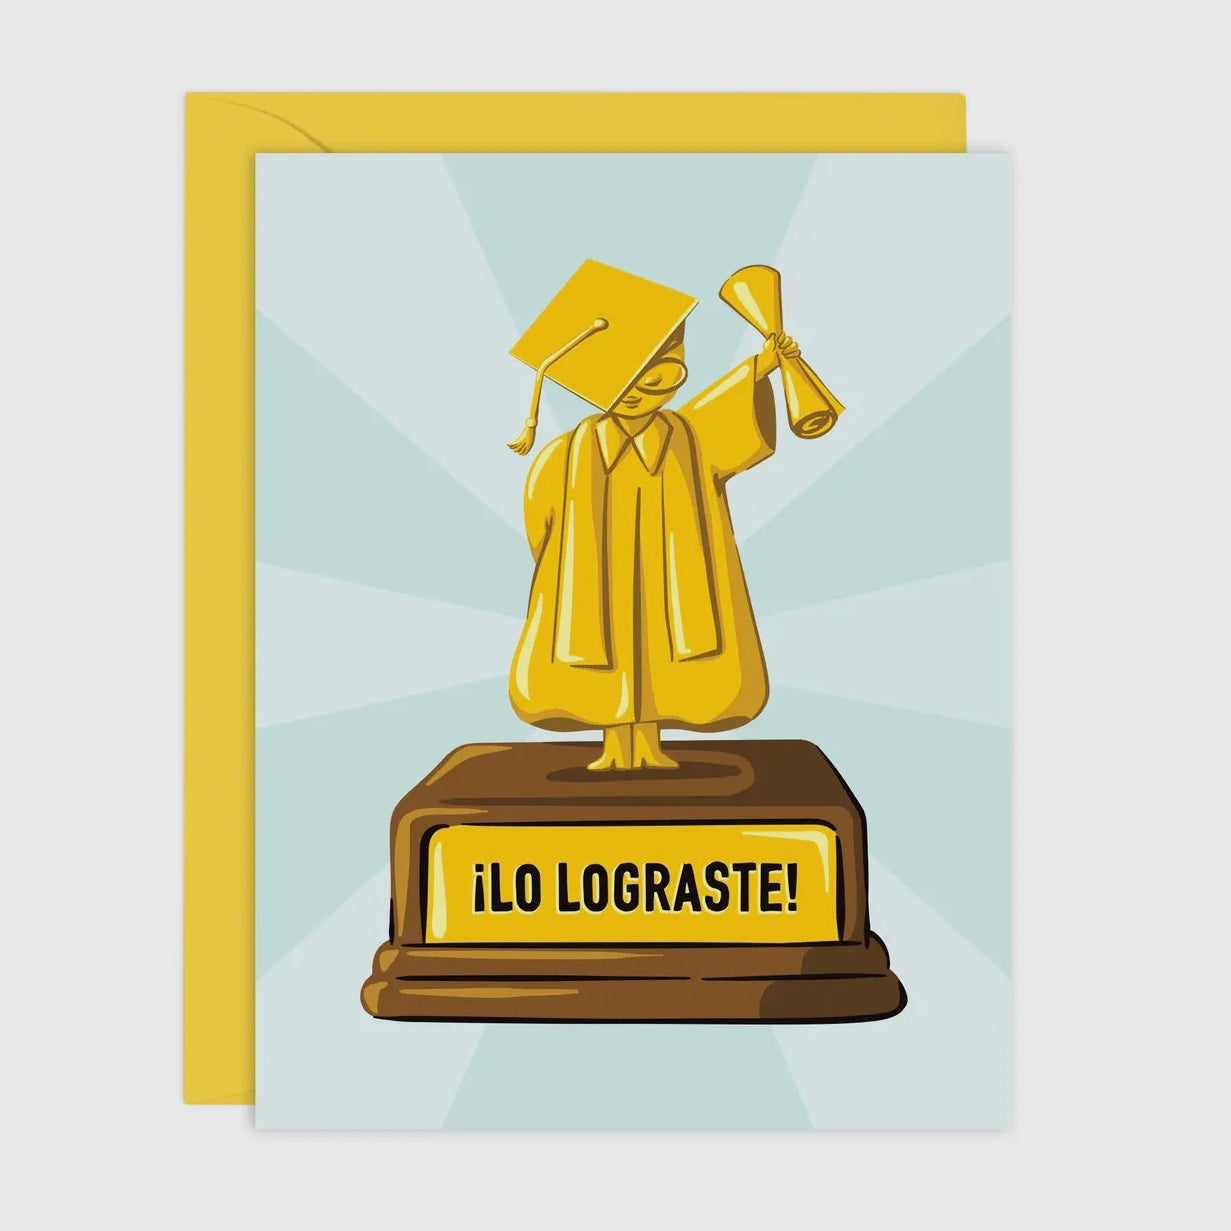 ¡Lo Lograste! - Graduation Card in Spanish